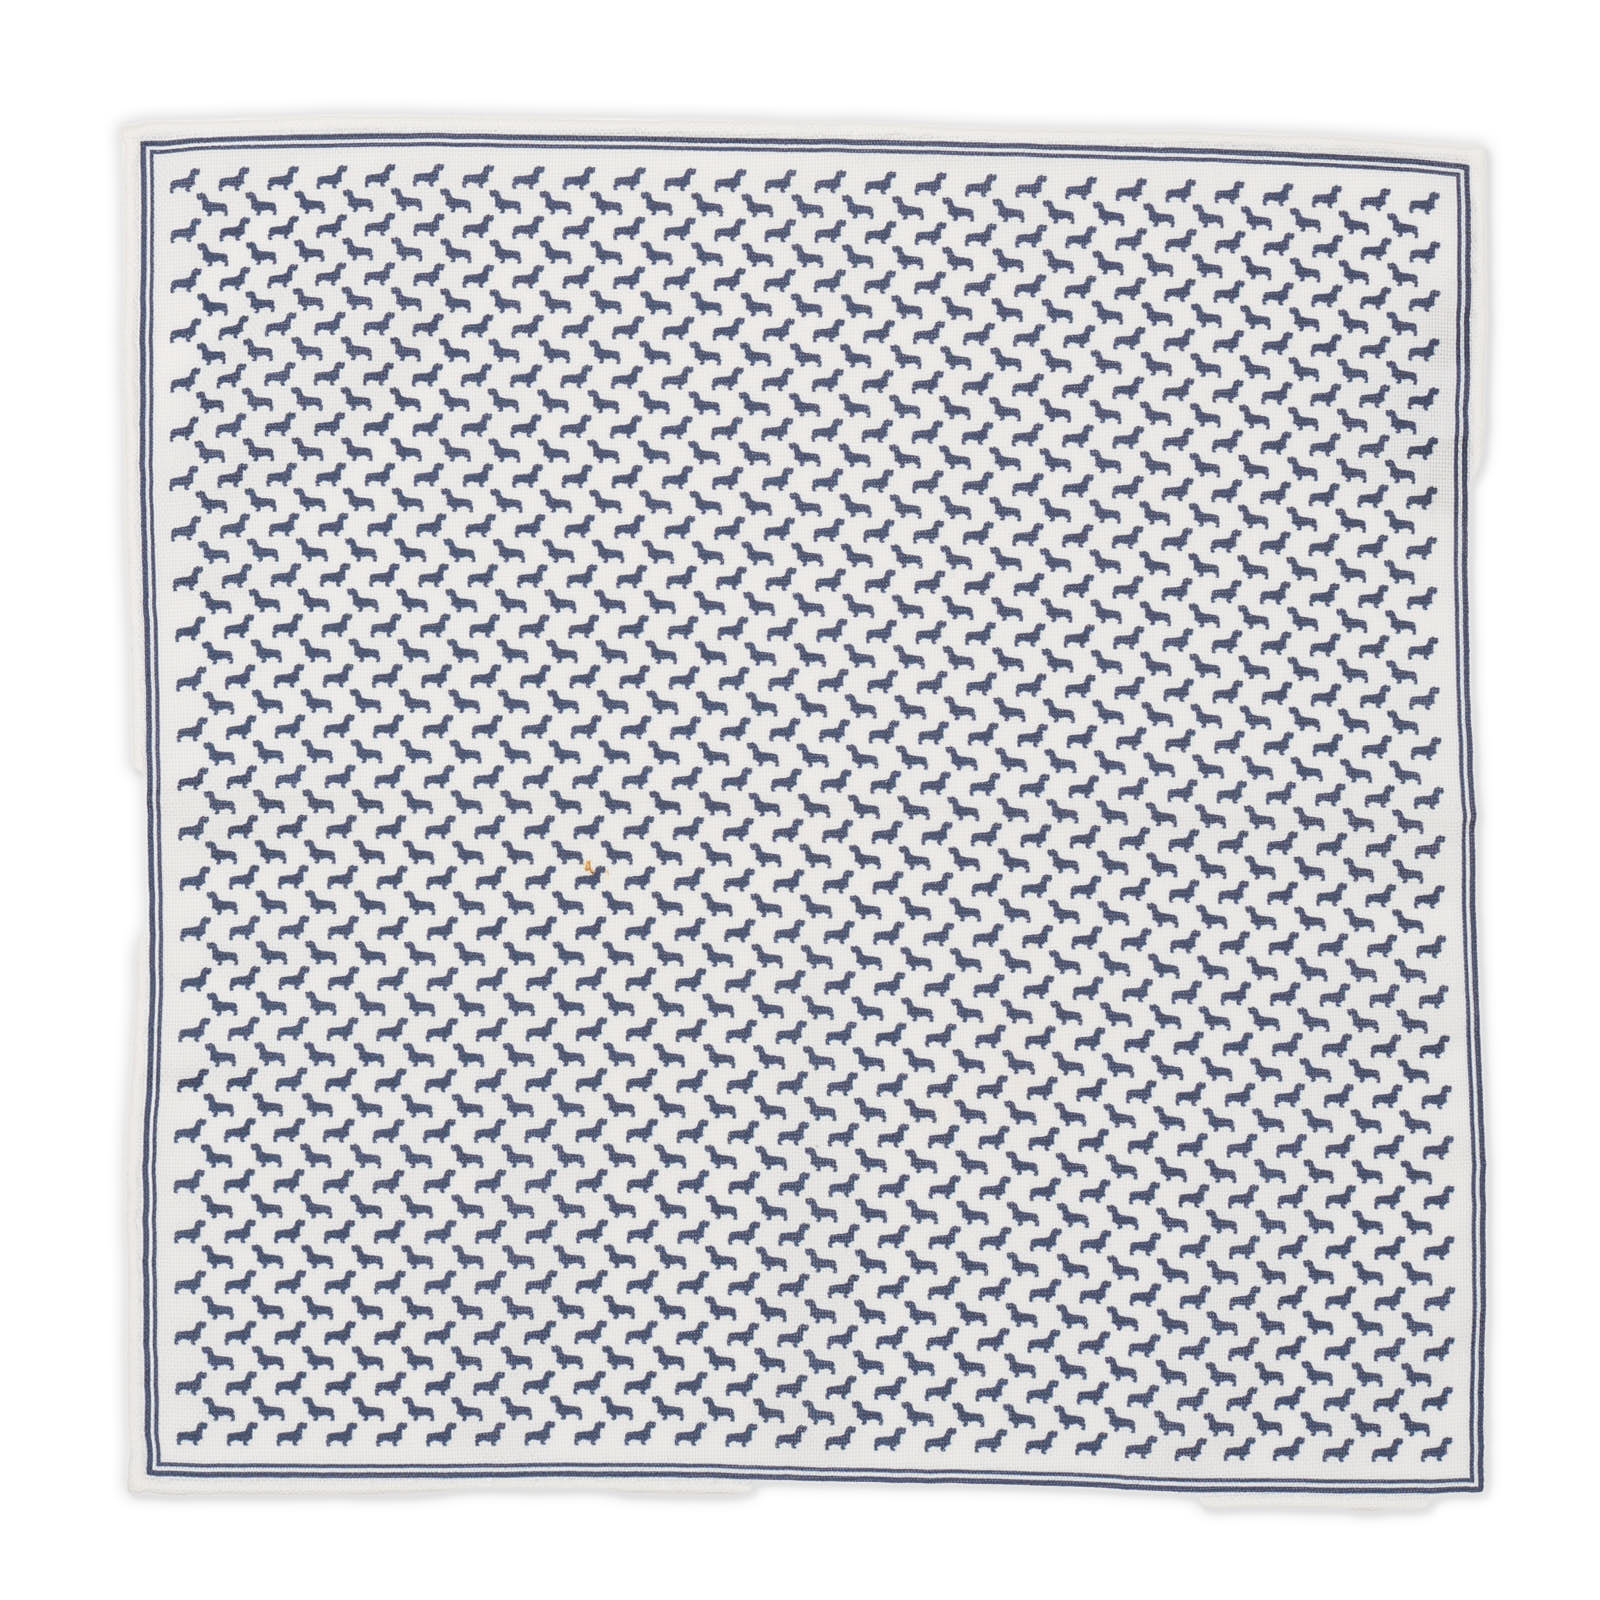 ROSI Handmade White-Blue Abstract Cotton Pocket Square NEW 30cm x 30cm